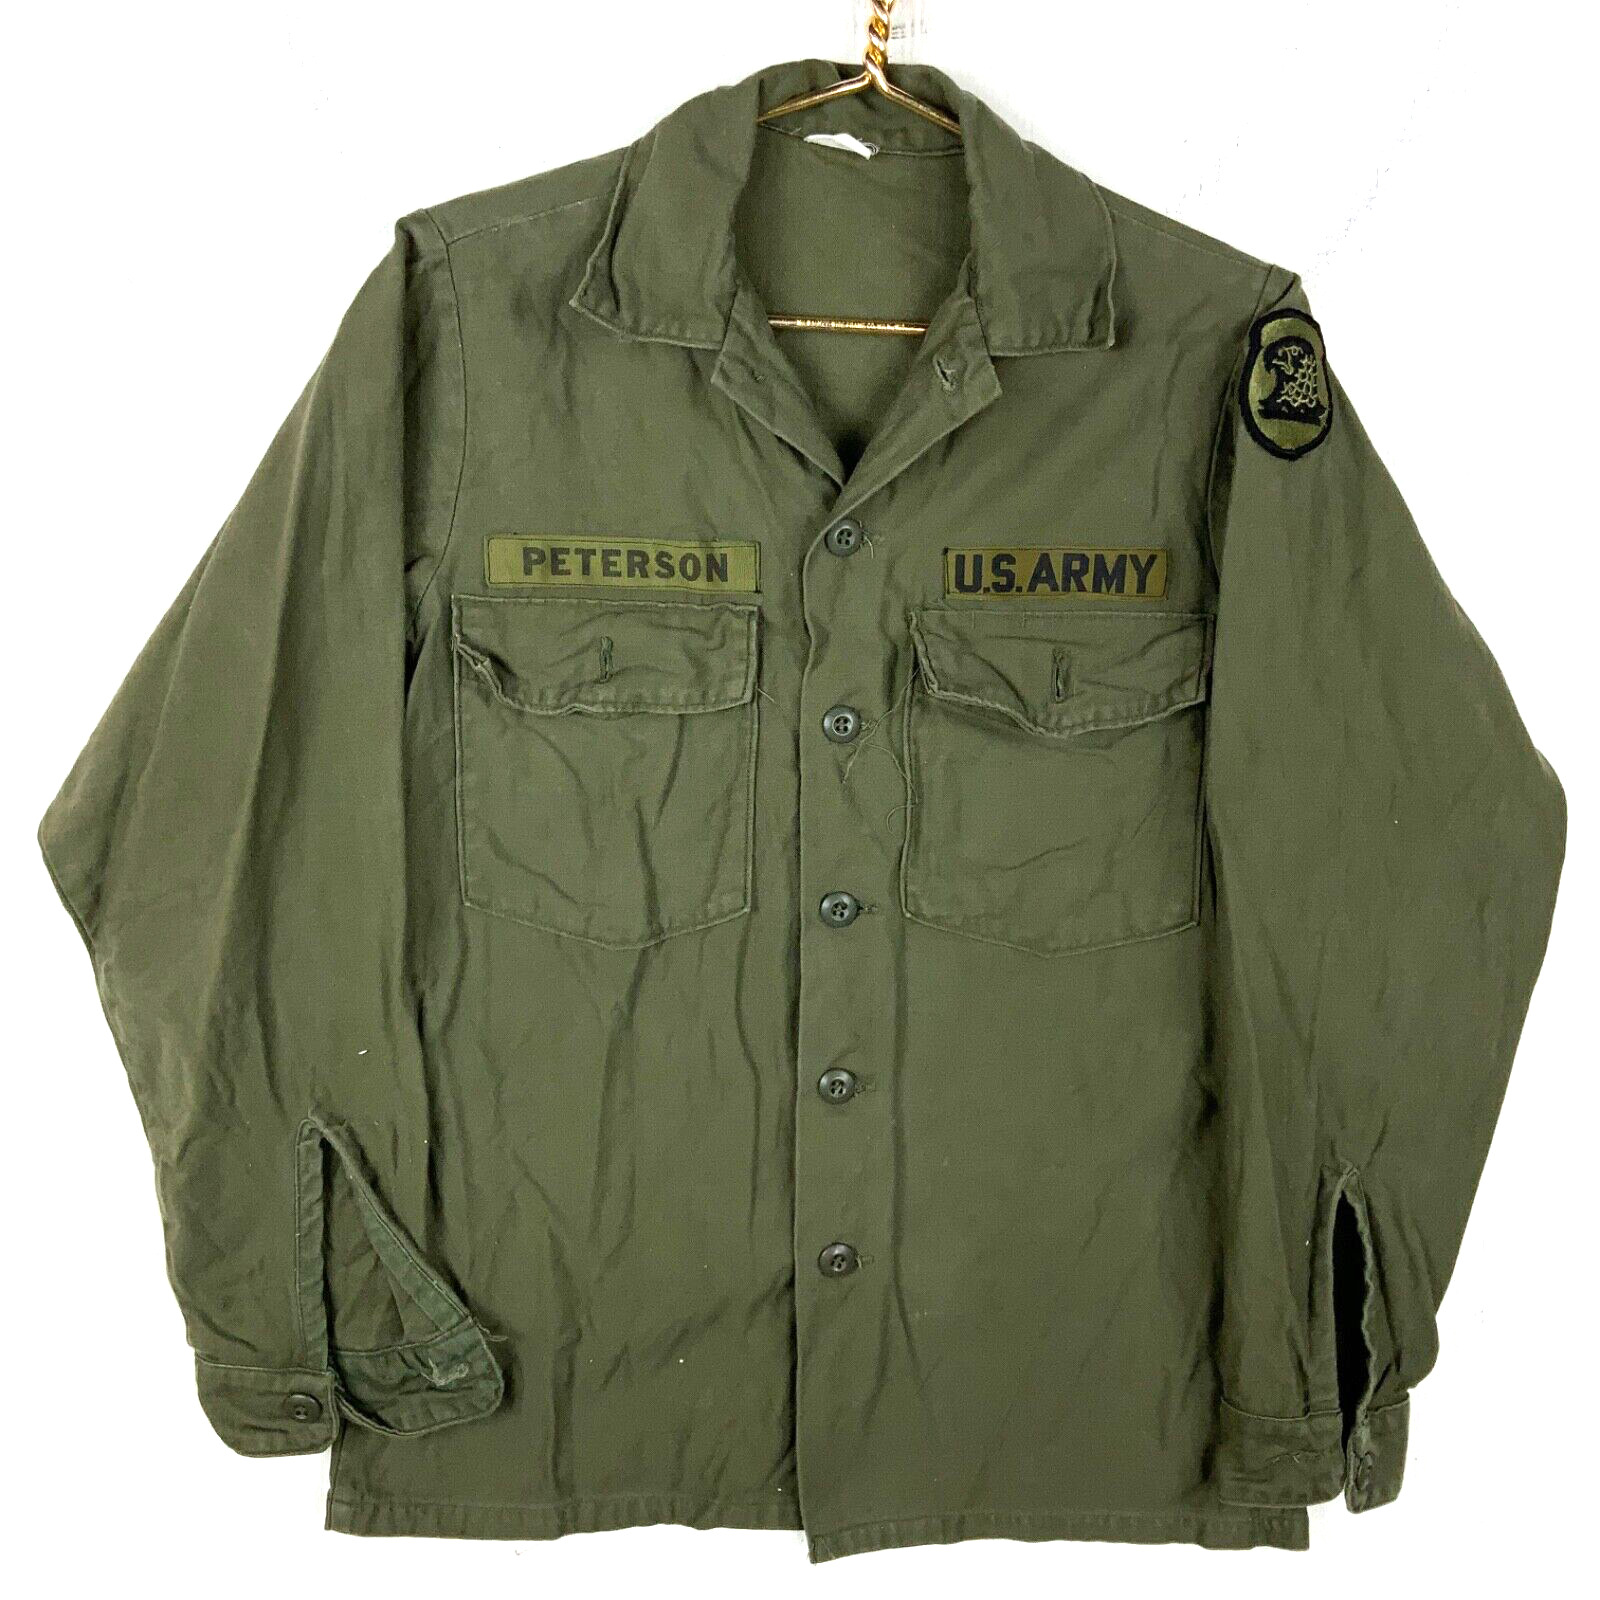 Vintage Us Army Og-107 Button Up Shirt Size 14.5x33 Green 1972 Vietnam Era 70s